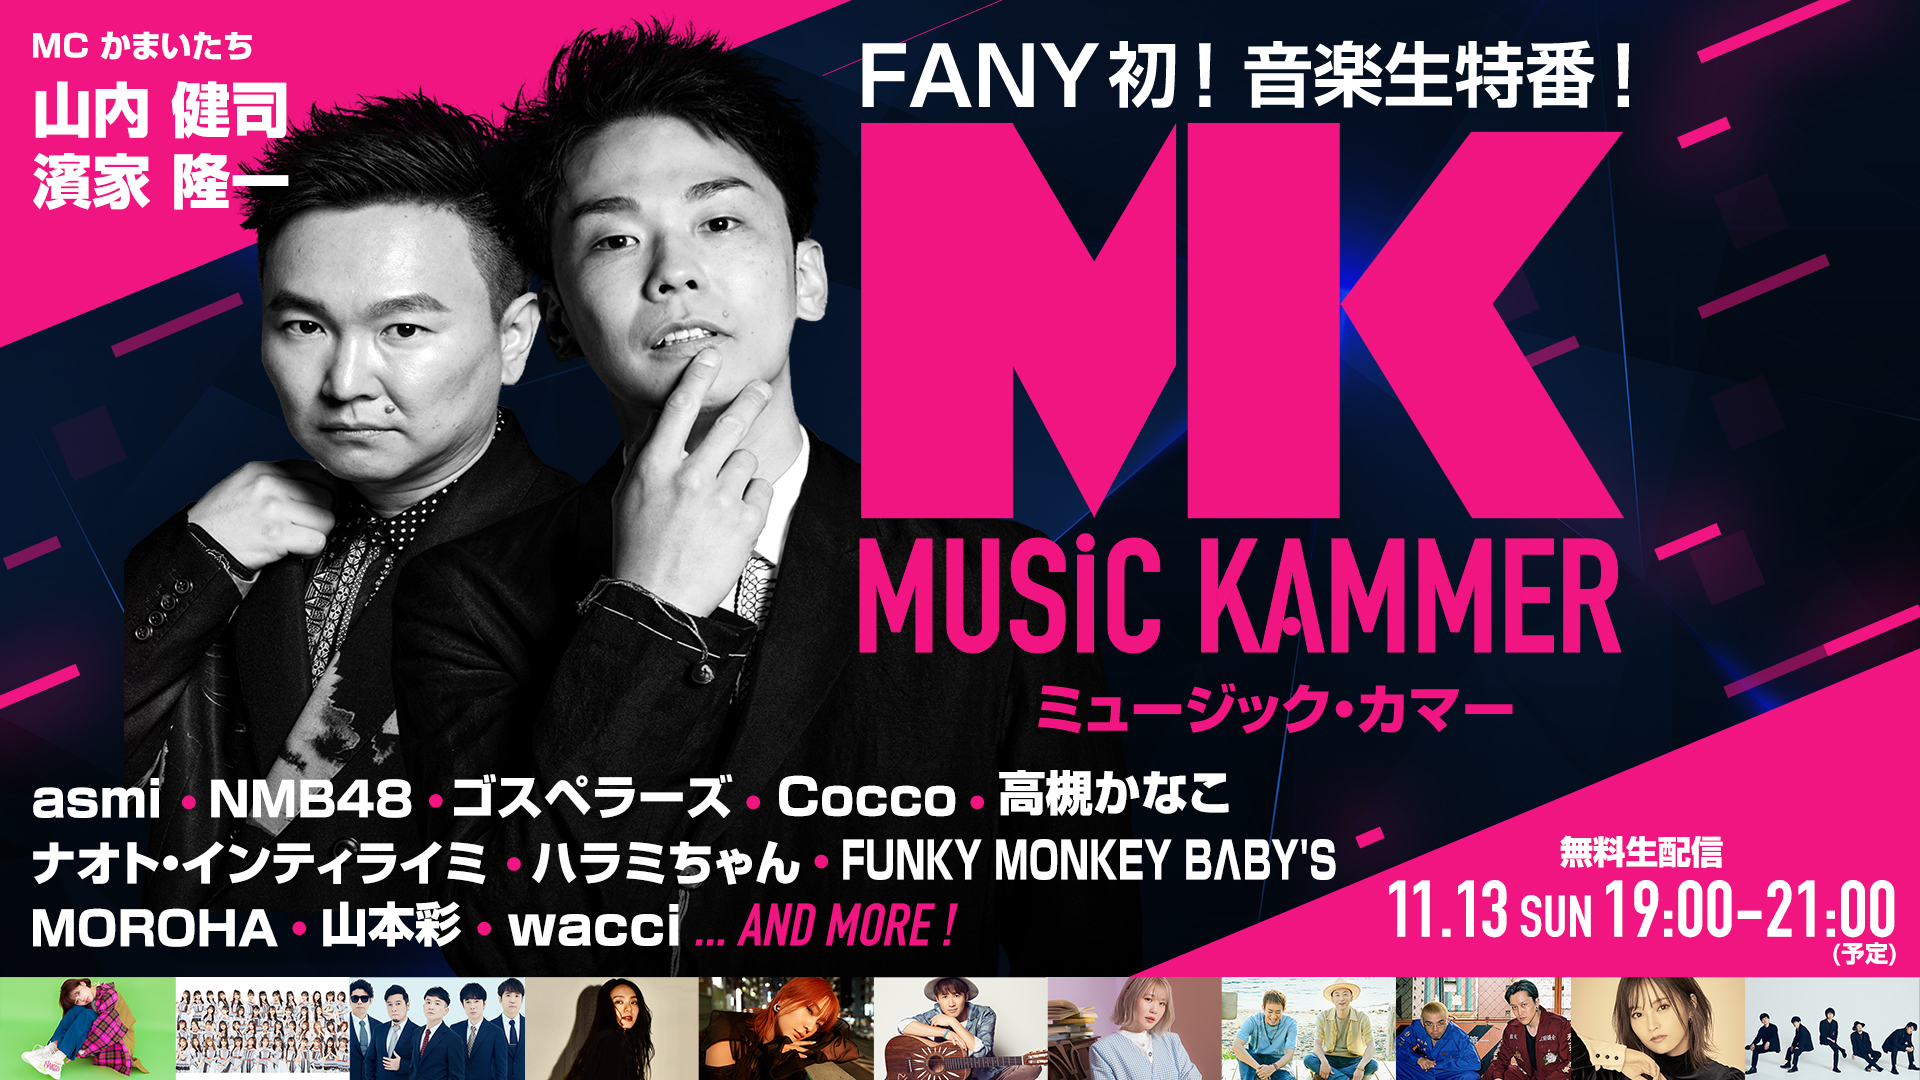 Nmb48 本彩らが出演 Fany 感謝祭 無料 特番 第二弾 ウタの ミュージック カマー 11 13 配信決定 Fany Magazine